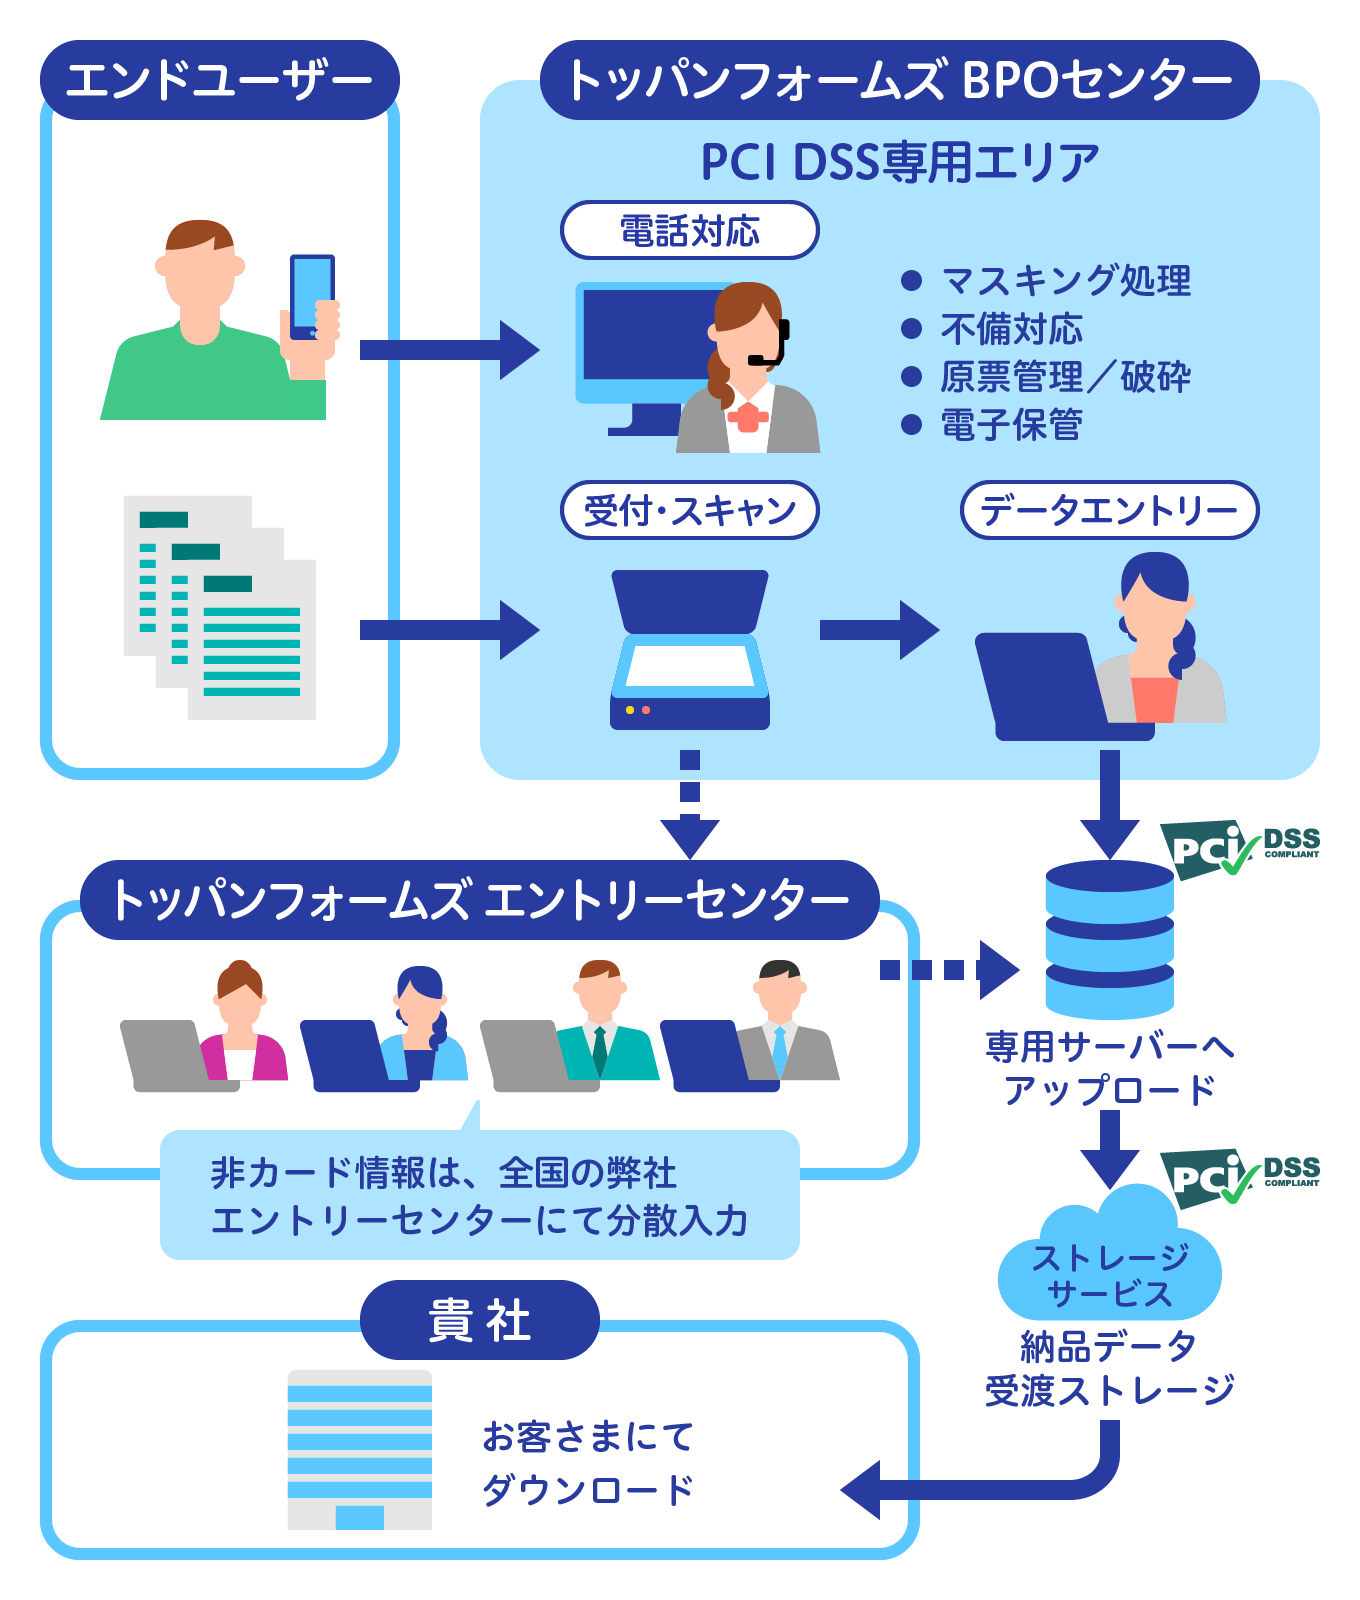 「PCI DSS準拠環境での業務支援」のフロー図